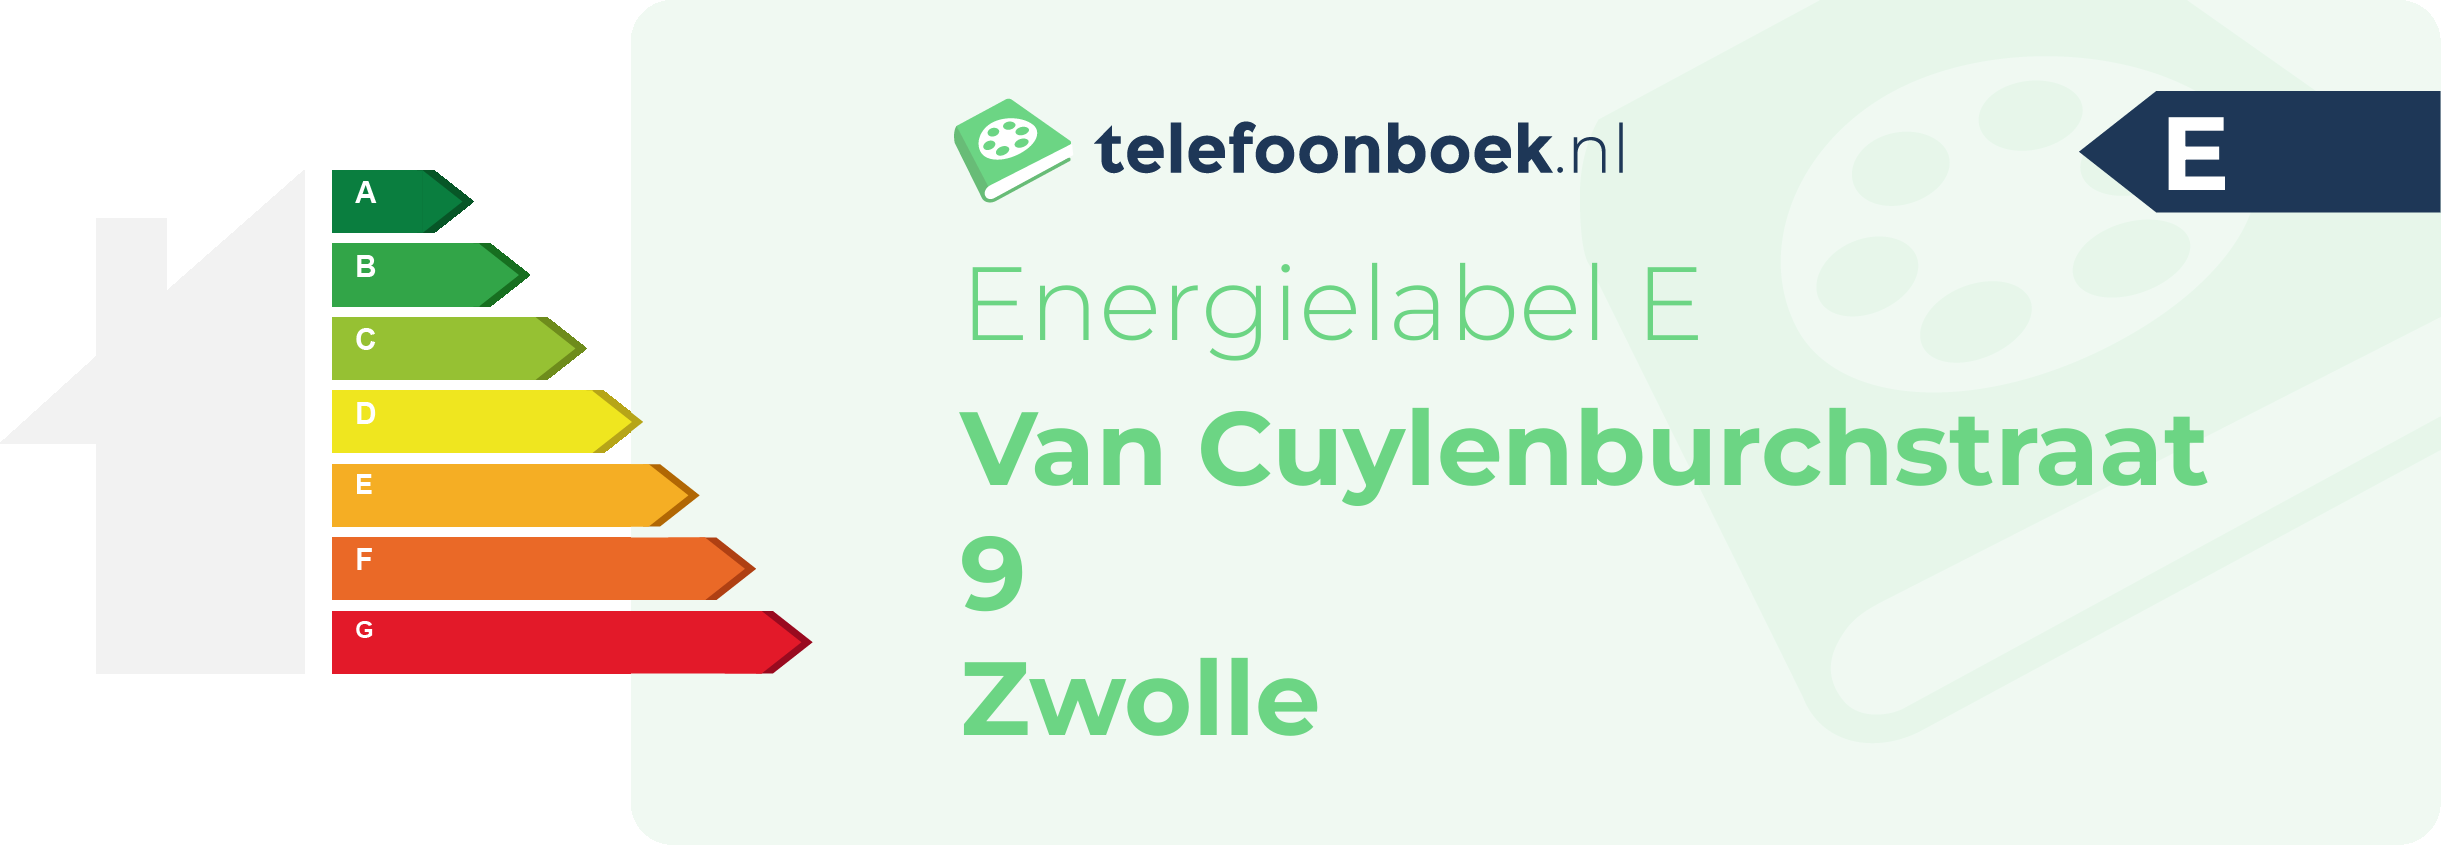 Energielabel Van Cuylenburchstraat 9 Zwolle